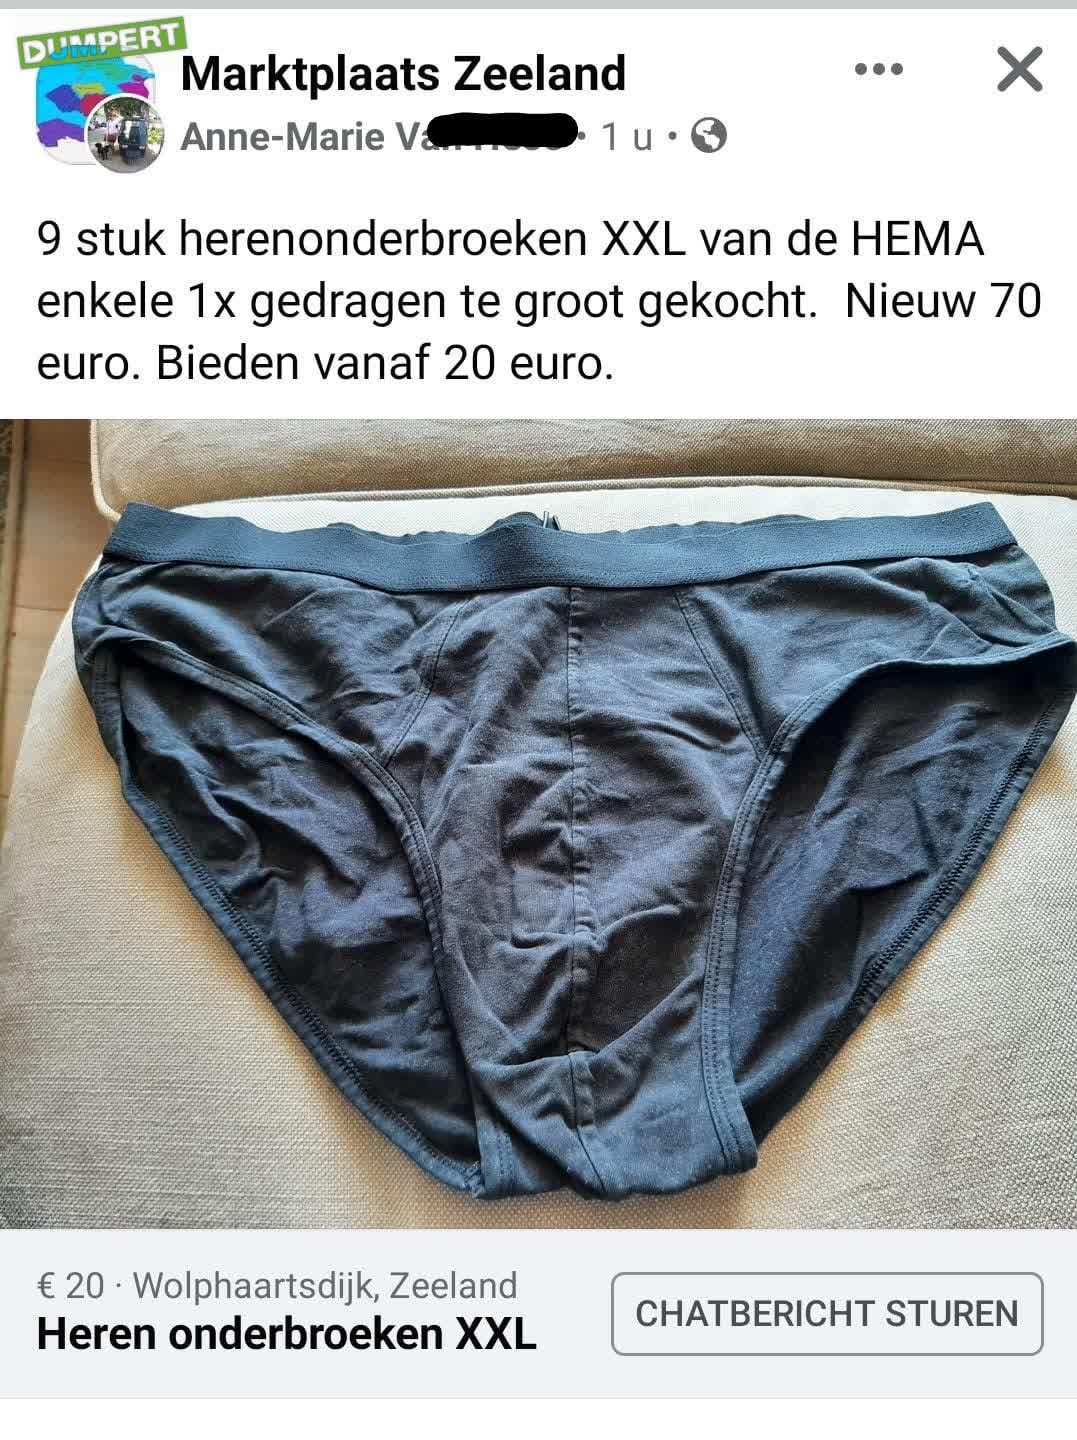 Afleiding duizelig Voetzool dumpert.nl - buitenkansje!